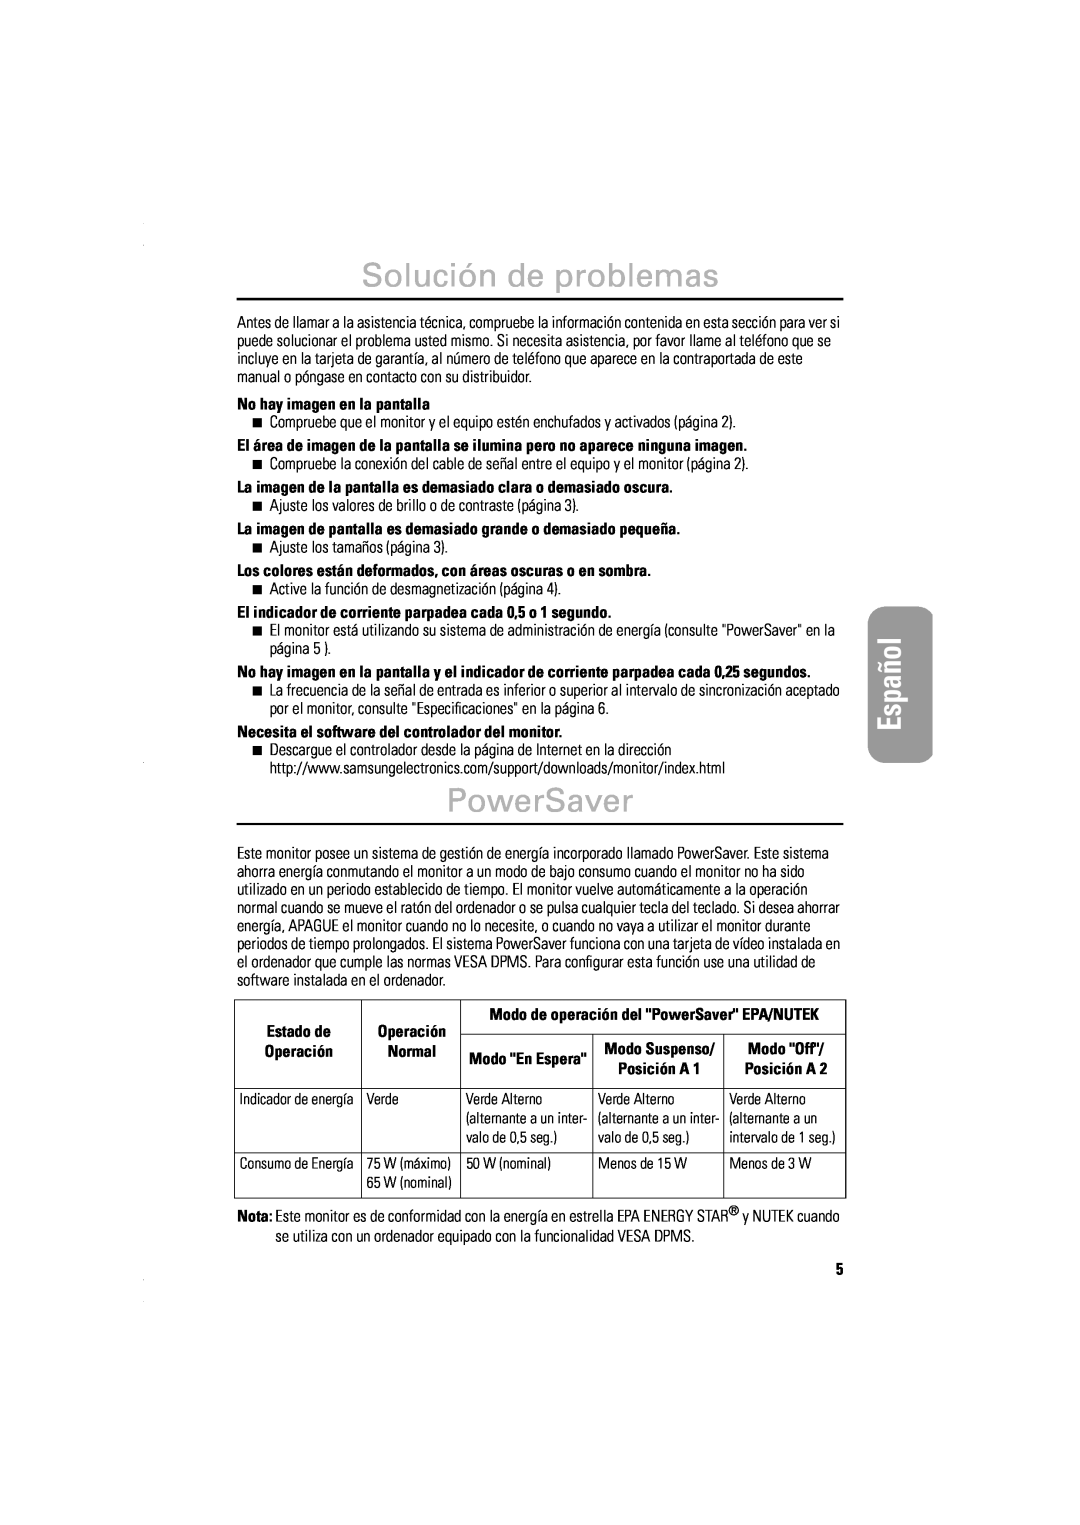 Samsung DP14LS, DP15LS manual Solución de problemas, PowerSaver, Italiano Portuguese Deutsch Español Français English 